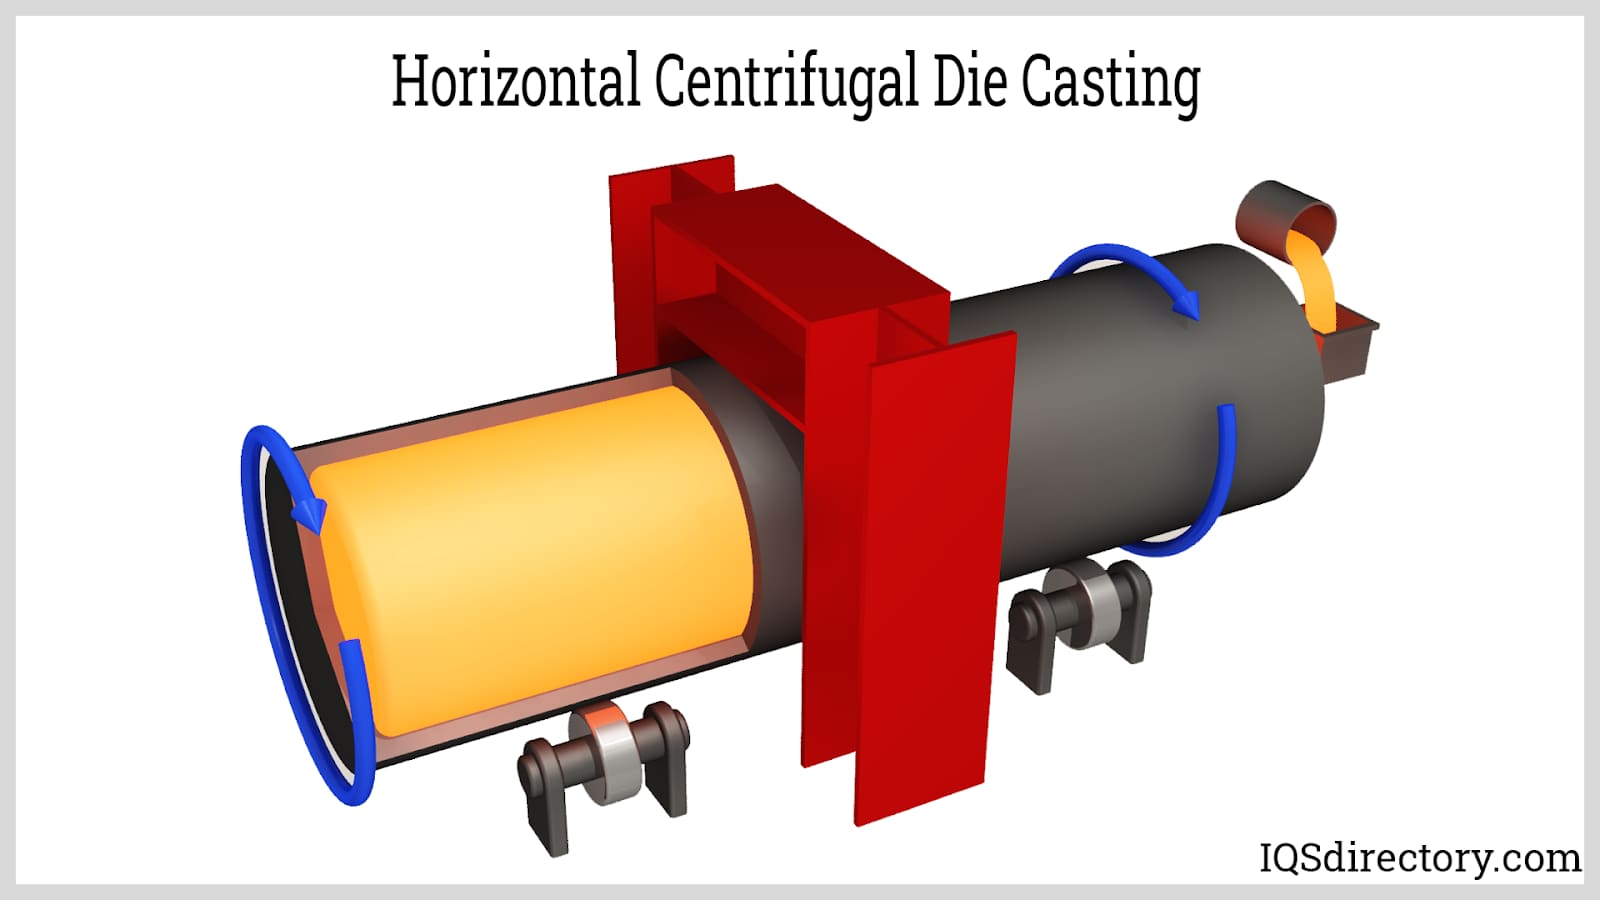 Horizontal Centrifugal Die Casting